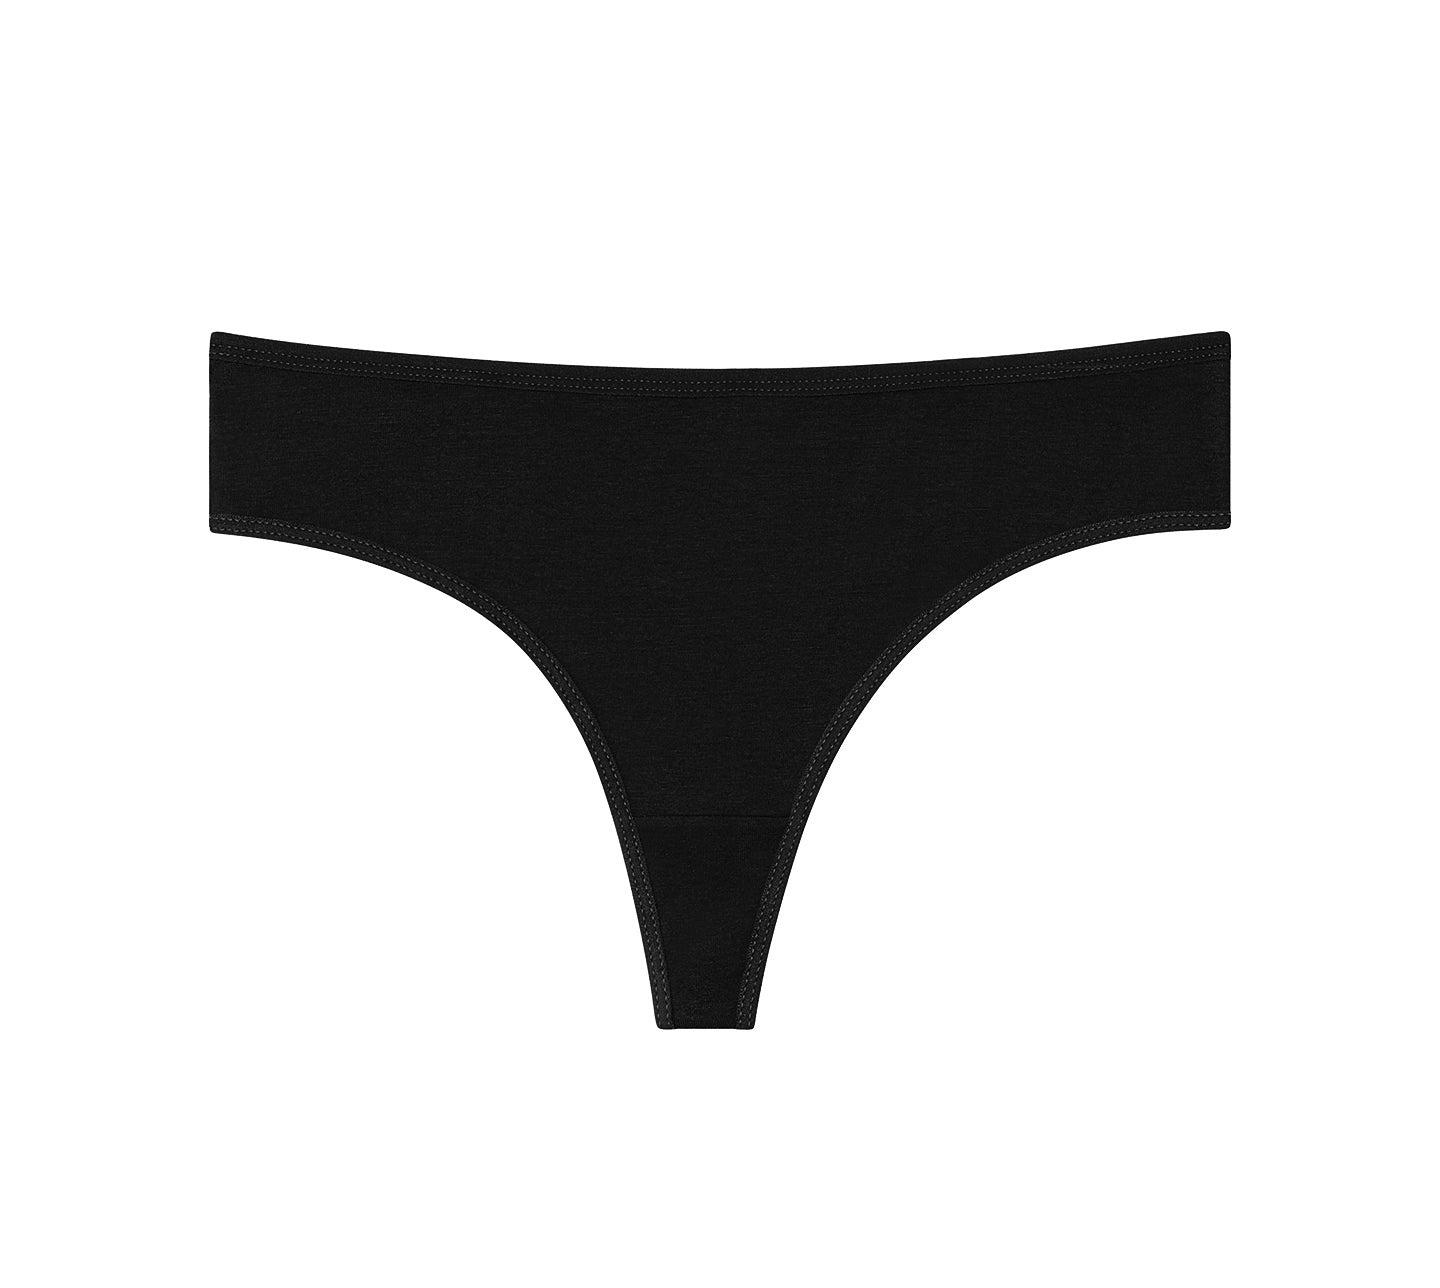 Nabtos Black Cotton Thongs Women's Basic Panties Underwear (Pack of 6)